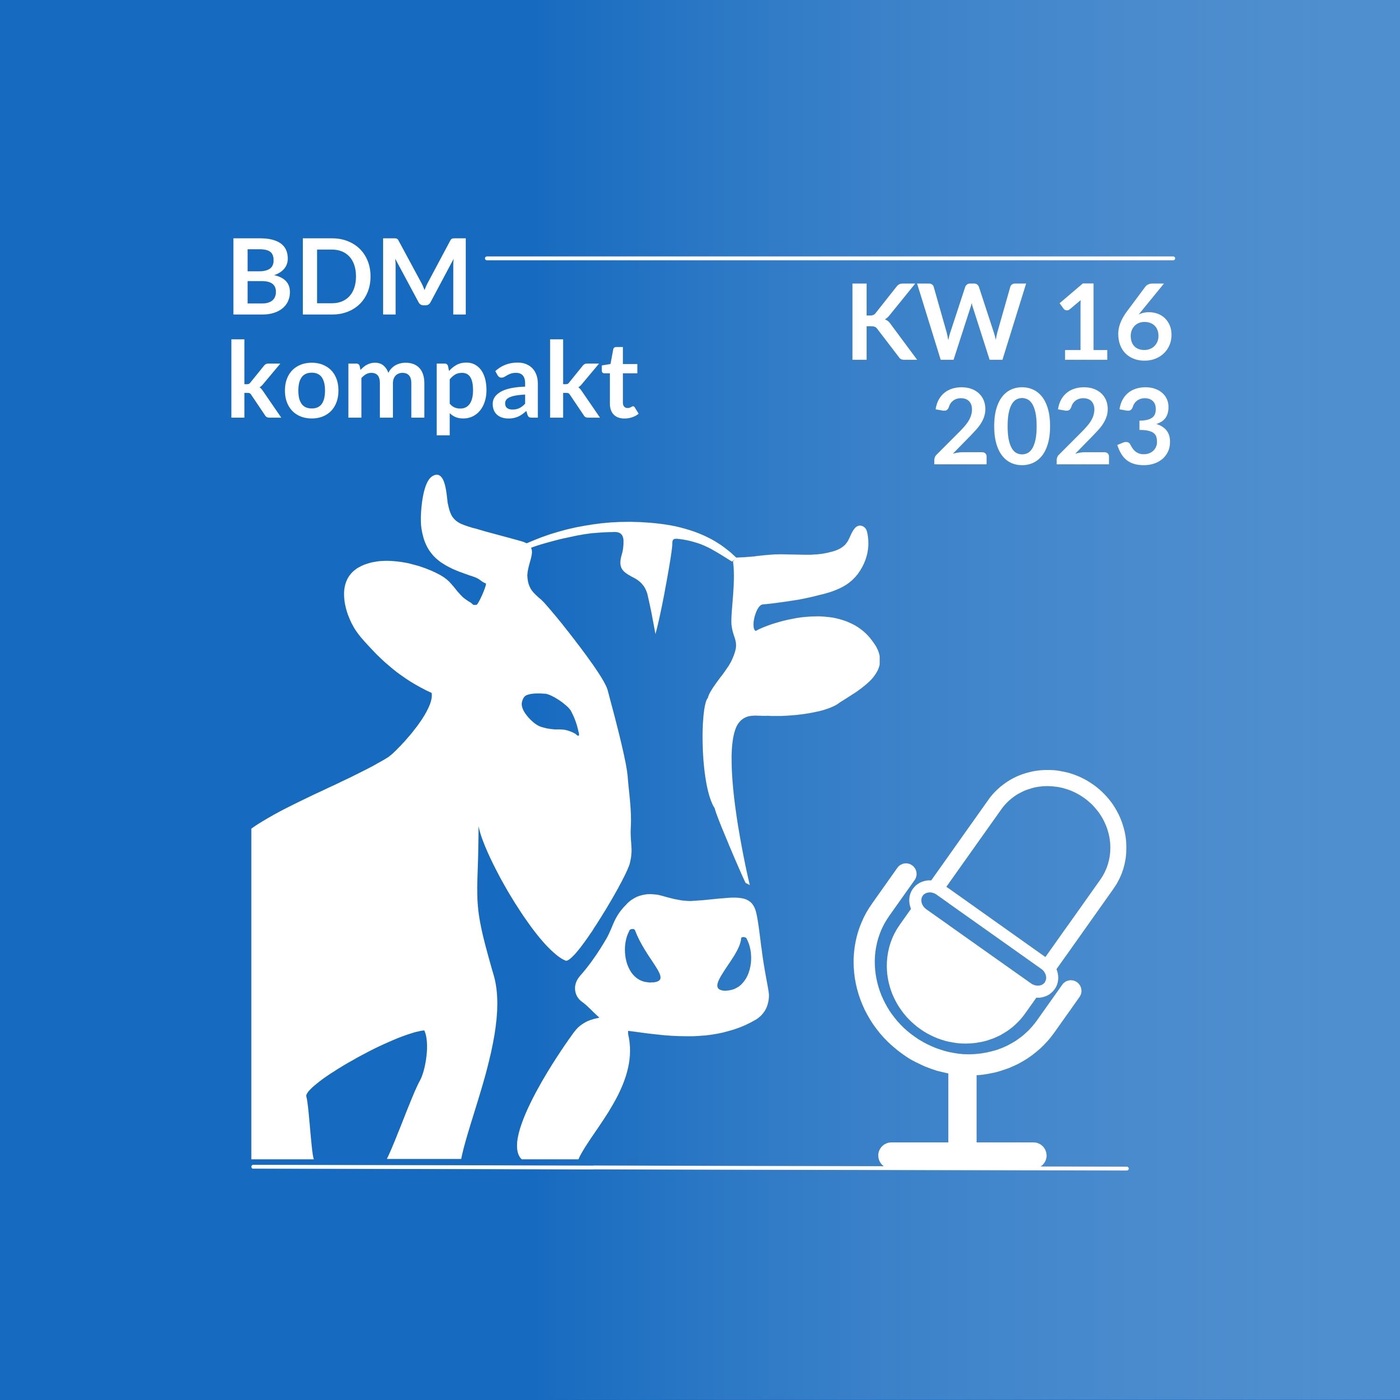 BDM kompakt KW 16/2023